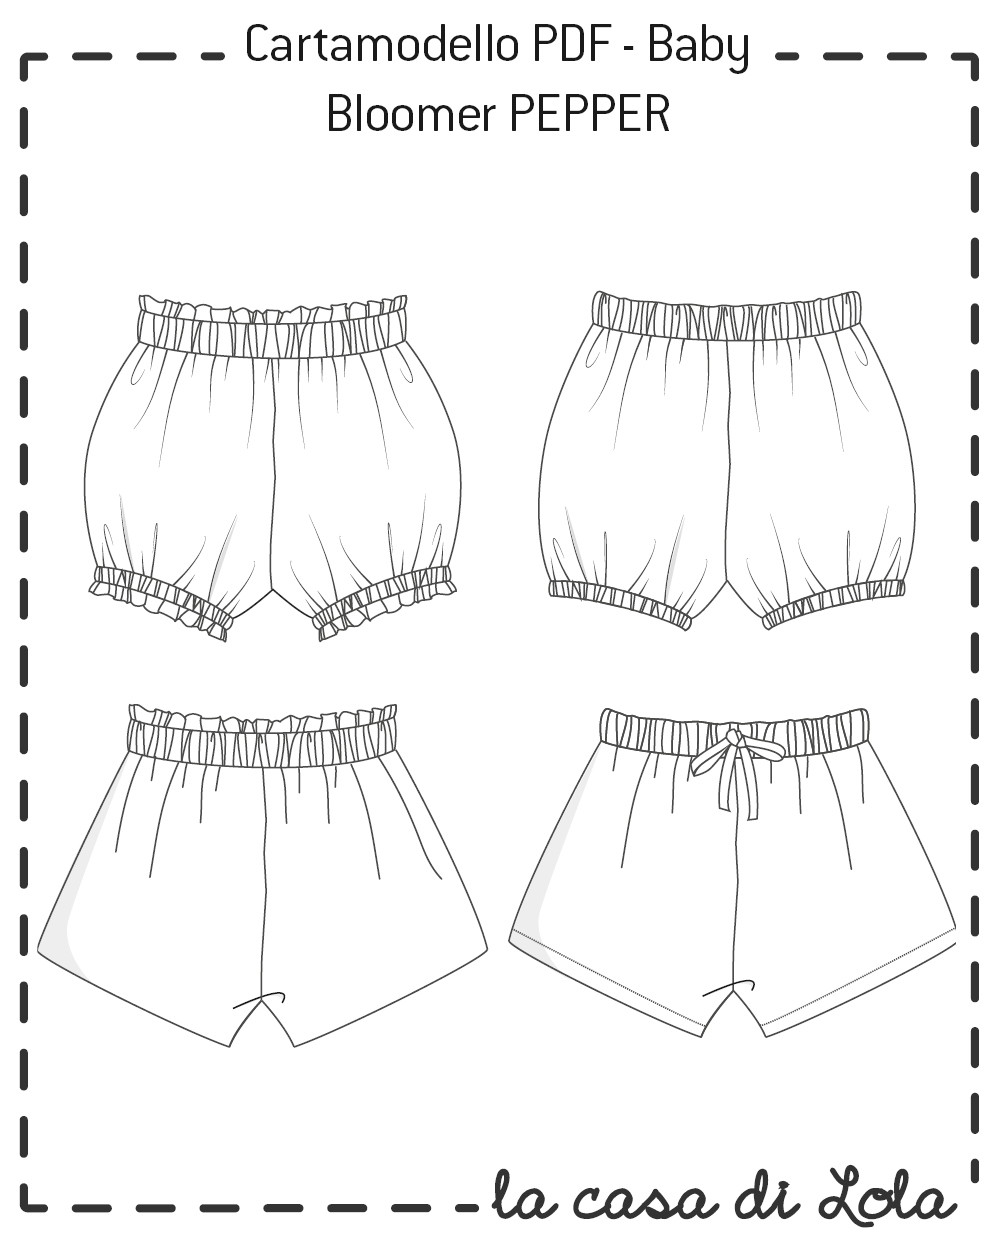 Cartamodello pantaloncino - bloomer per bimbi, scaricabile in Pdf